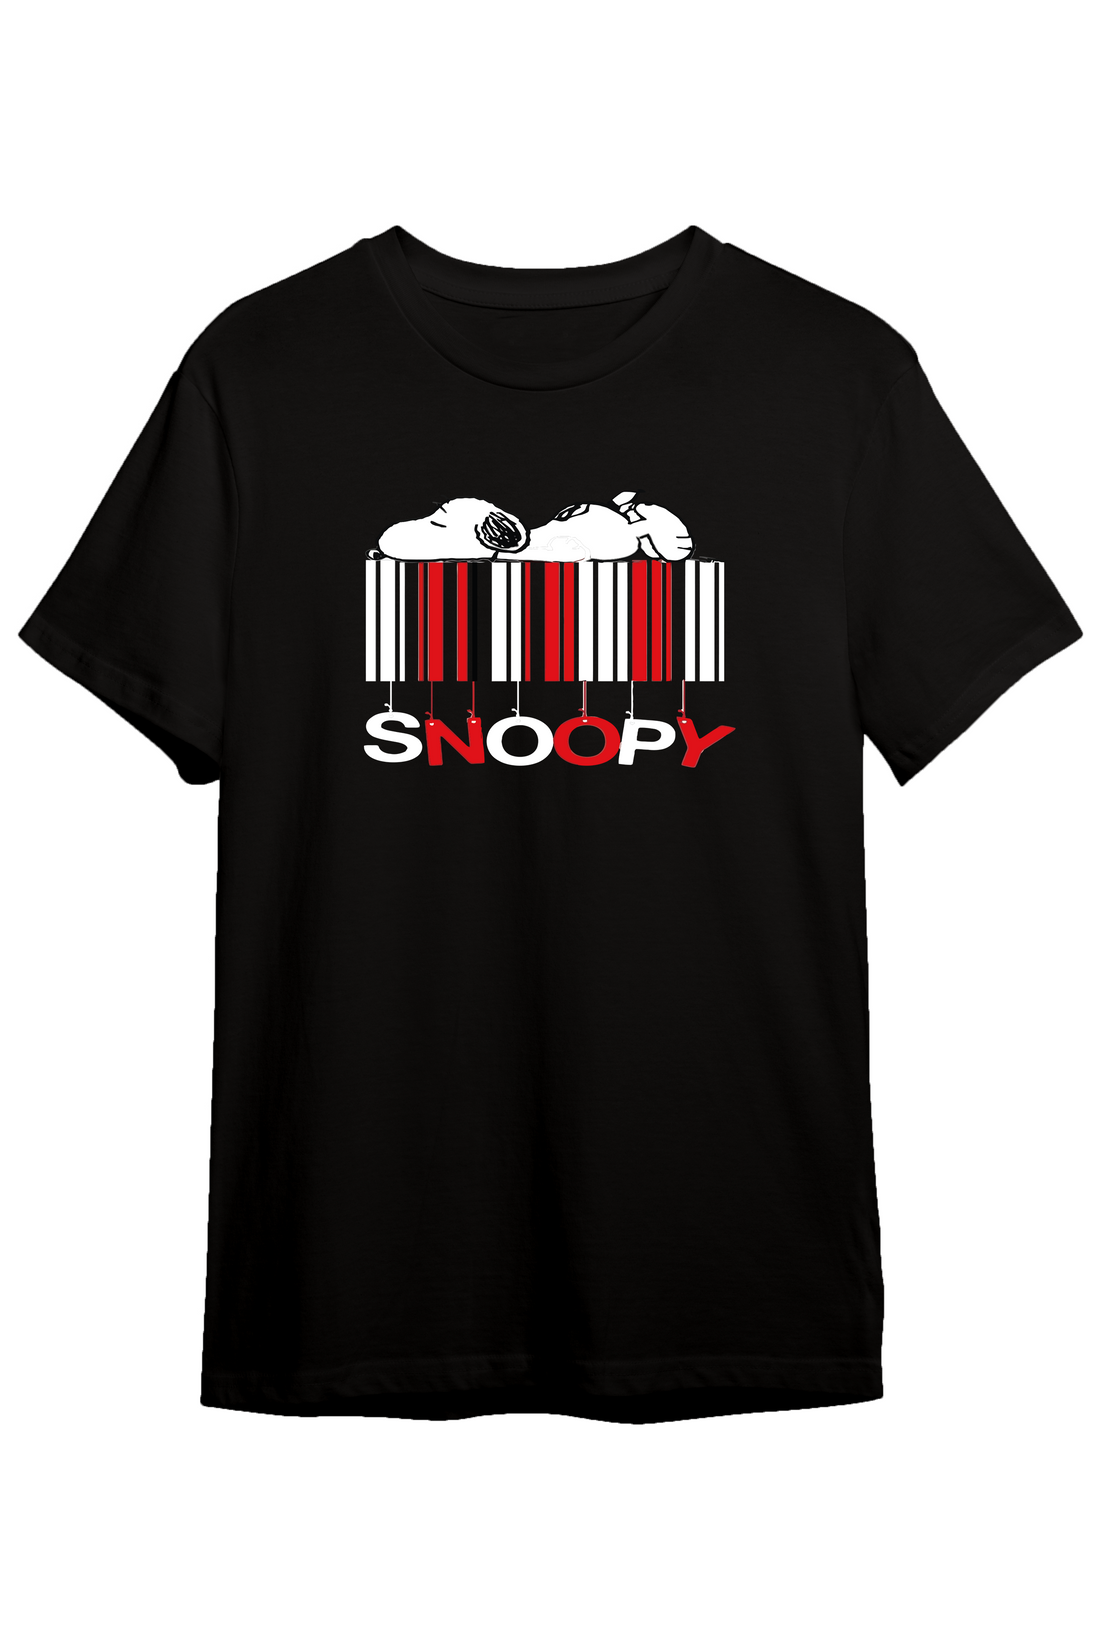 Snoopy Barcode - Regular Tshirt